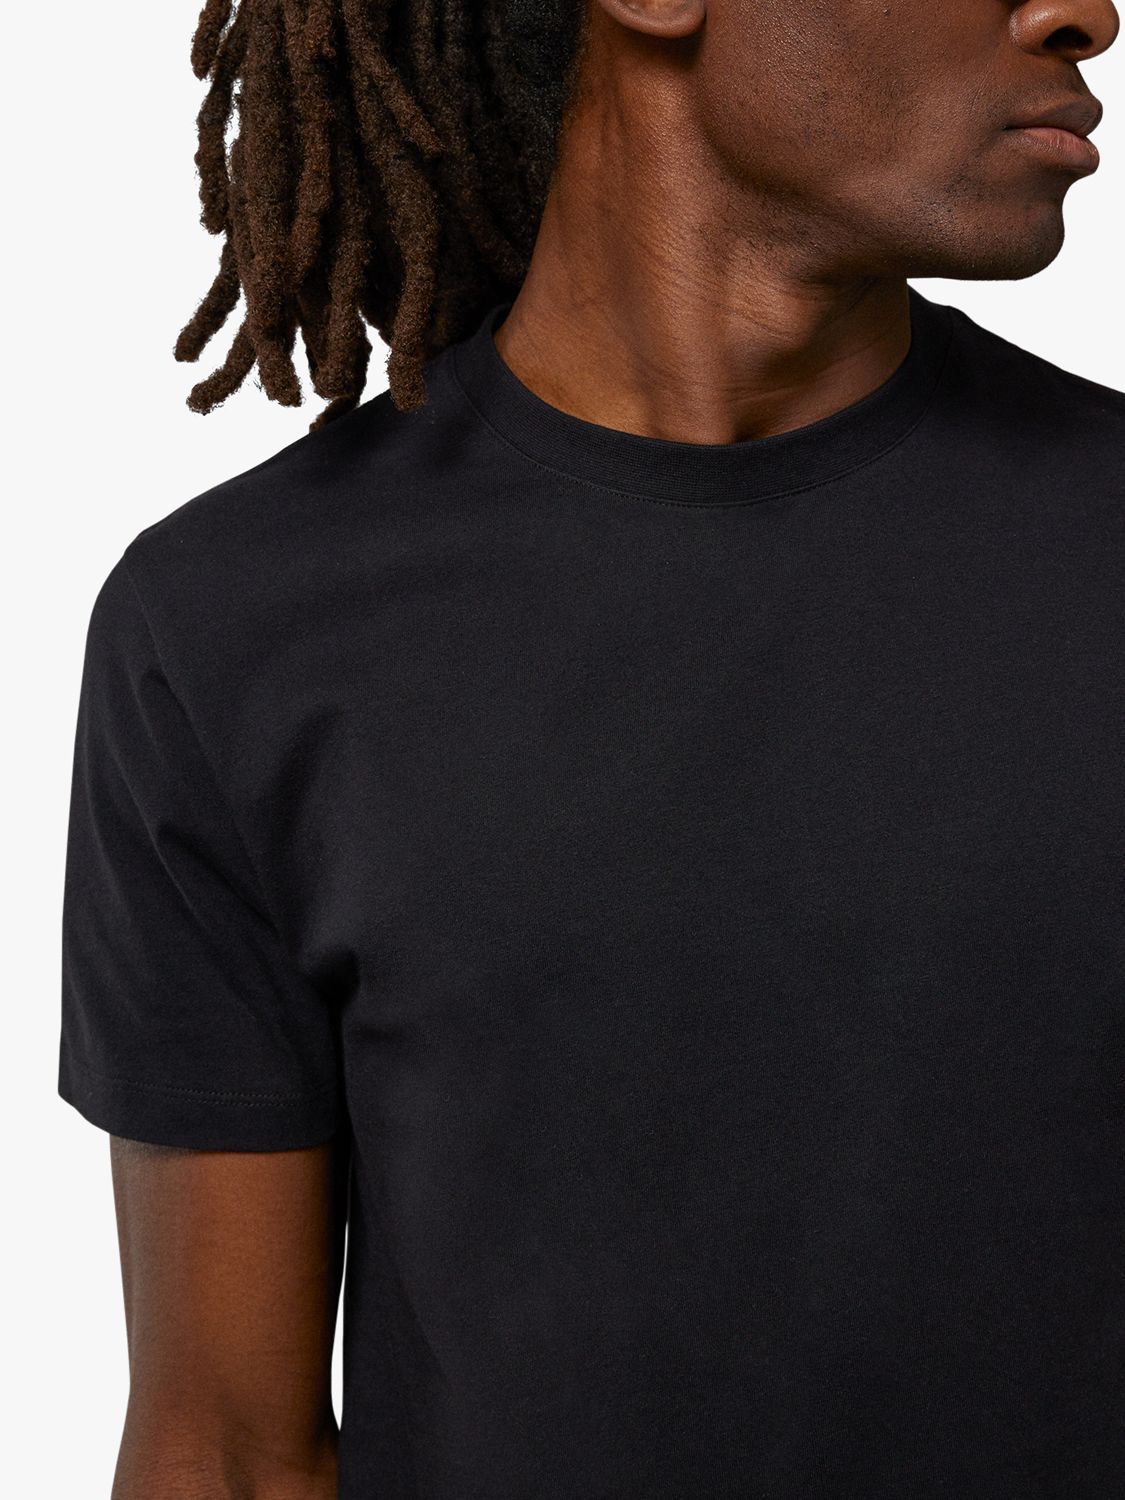 J.Lindeberg Sid Basic T-Shirt, Black at John Lewis & Partners